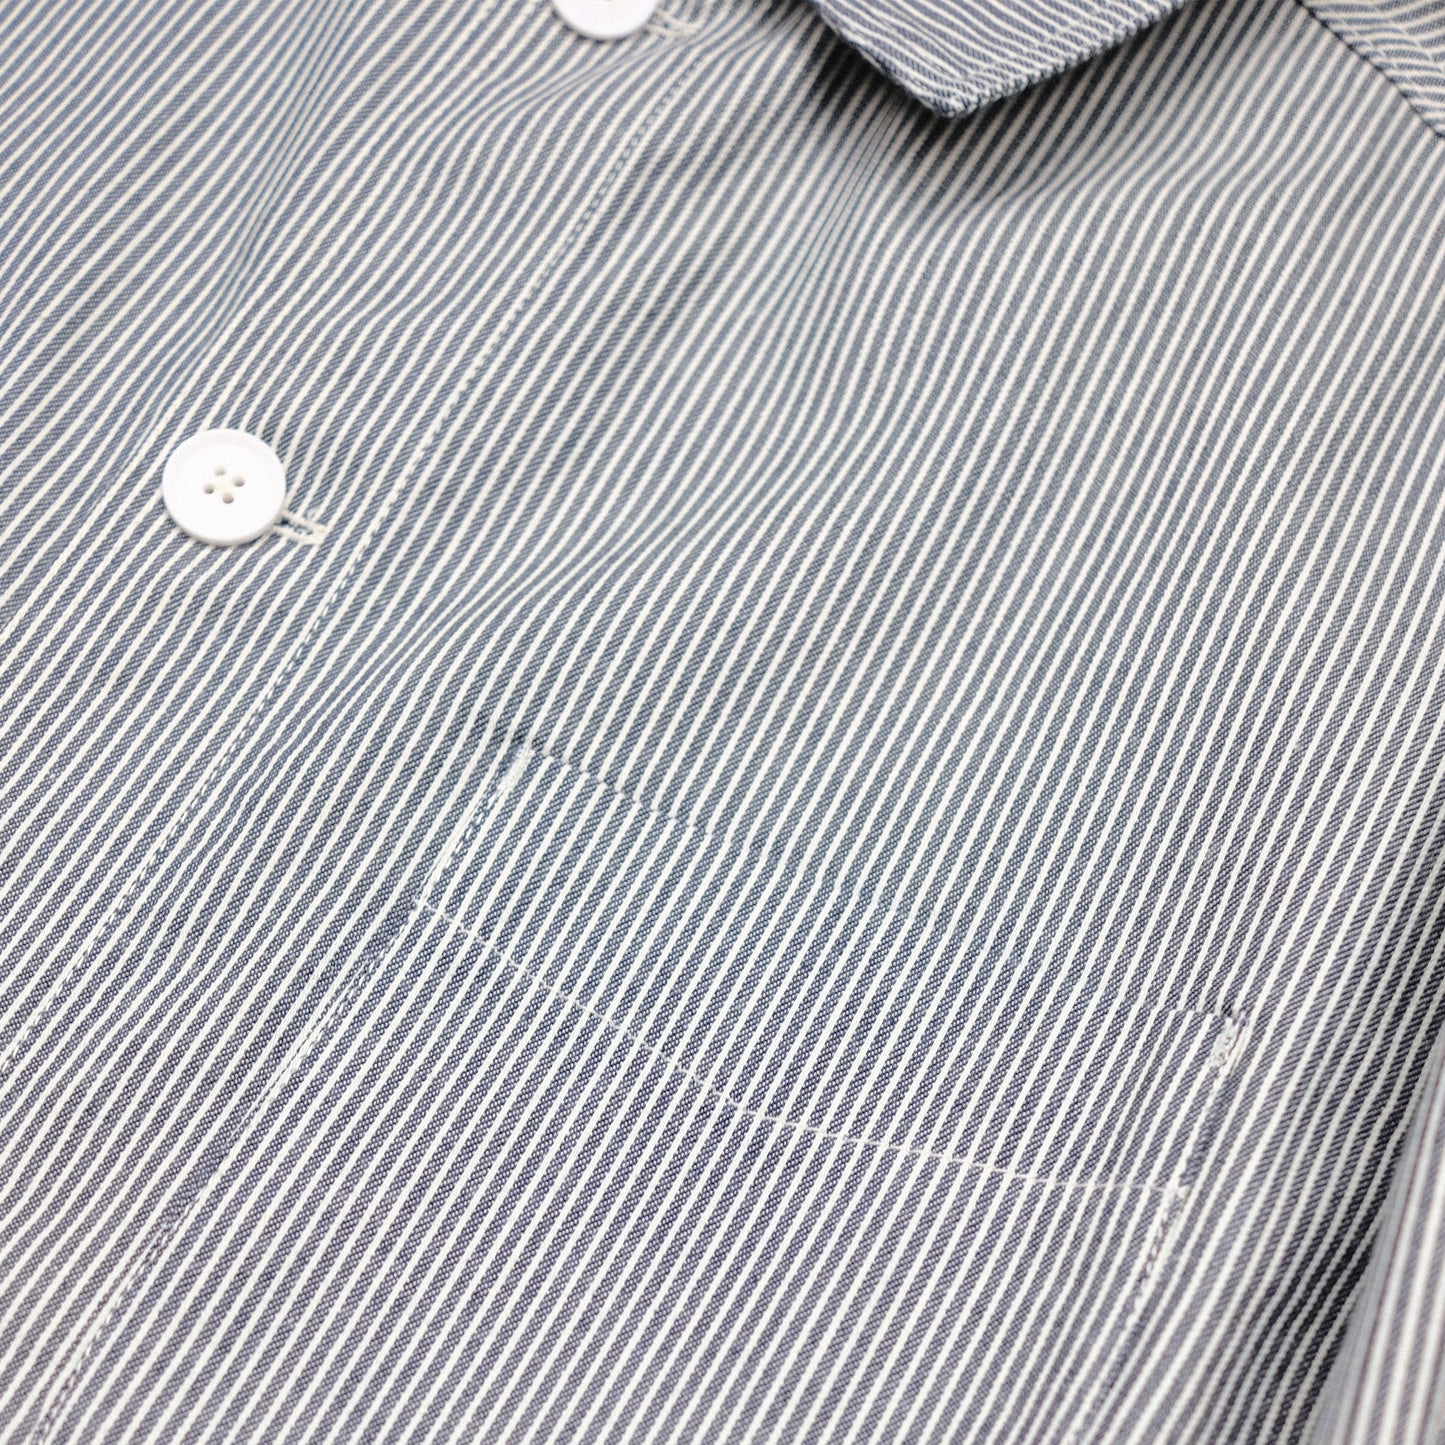 Grey Flannel - Hickory Stripe Chore Jacket